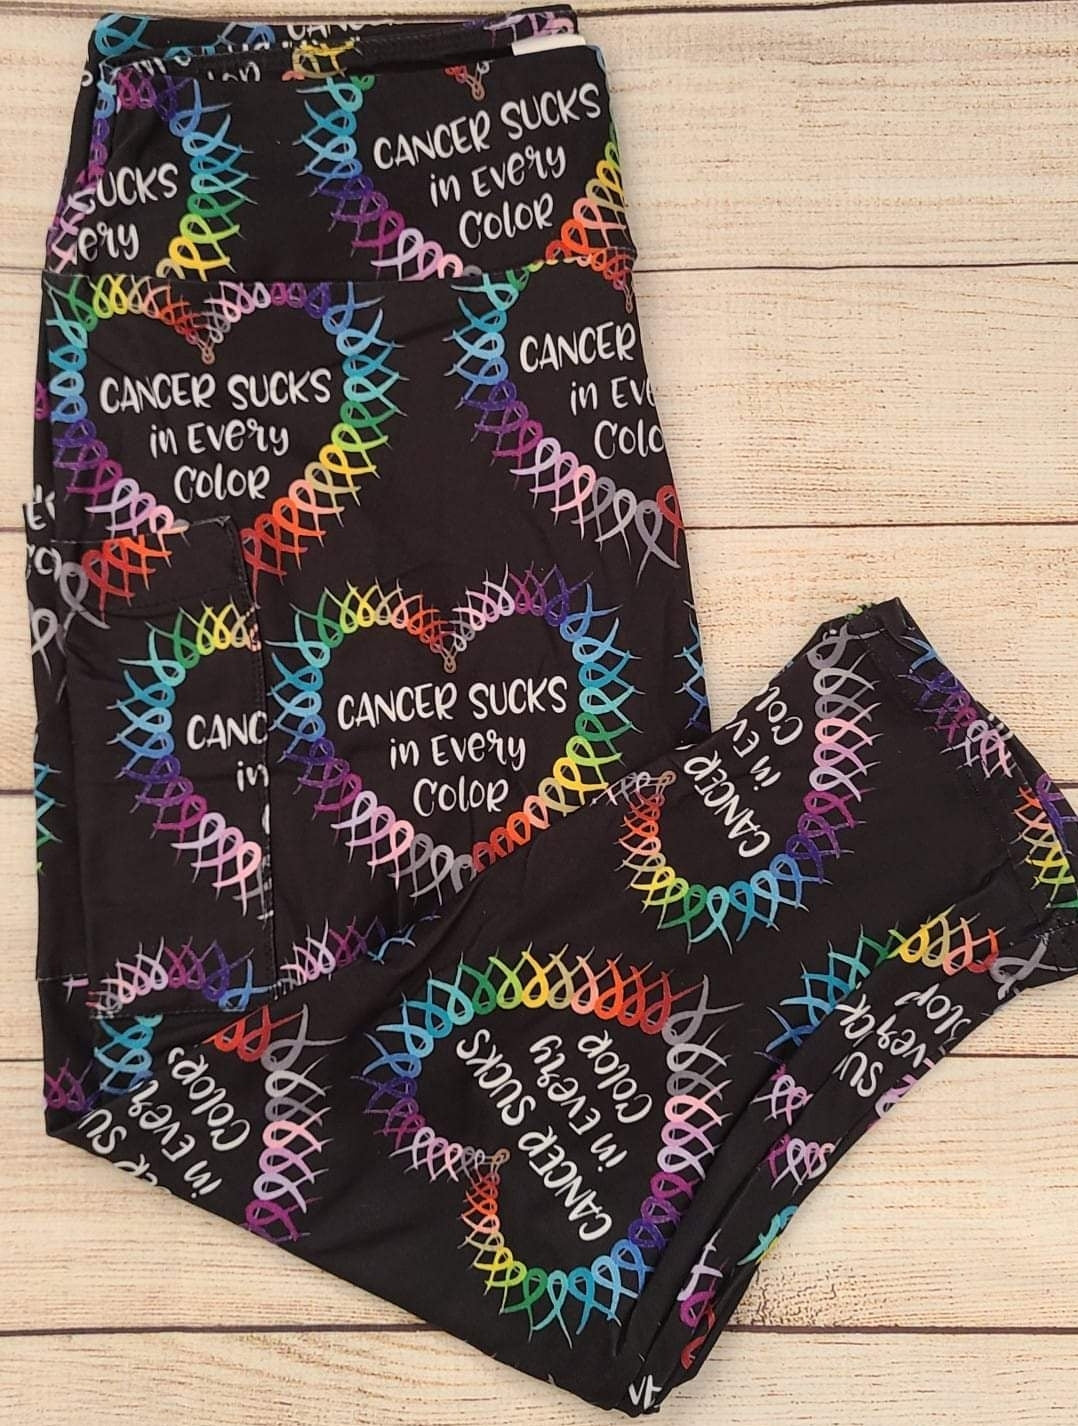 Cancer Sucks leggings or capri w/pockets